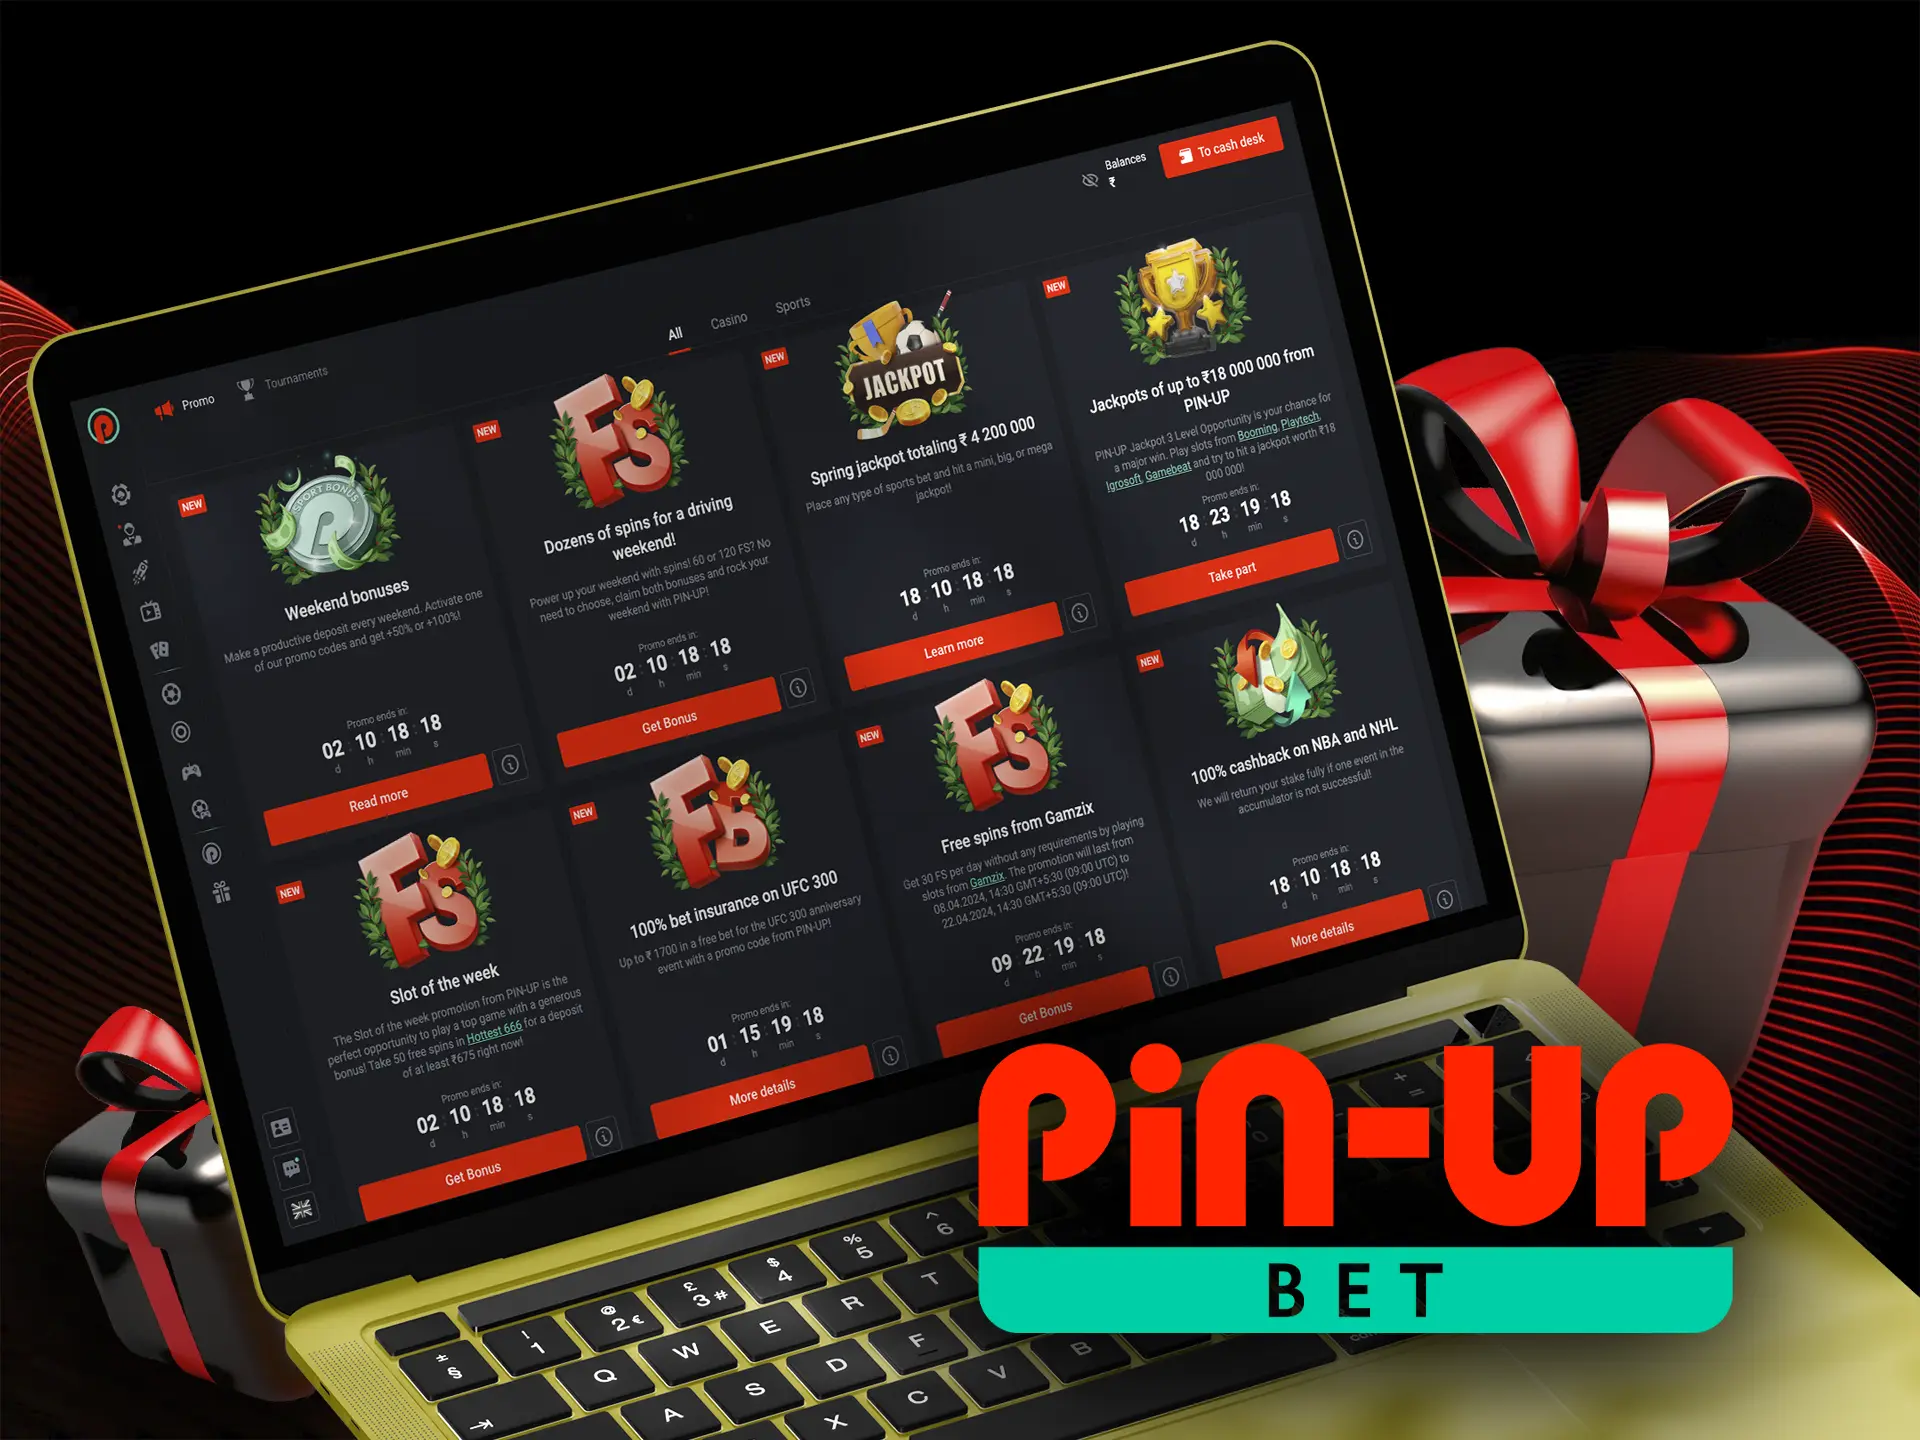 Pin Up has bonuses for both new and regular players.